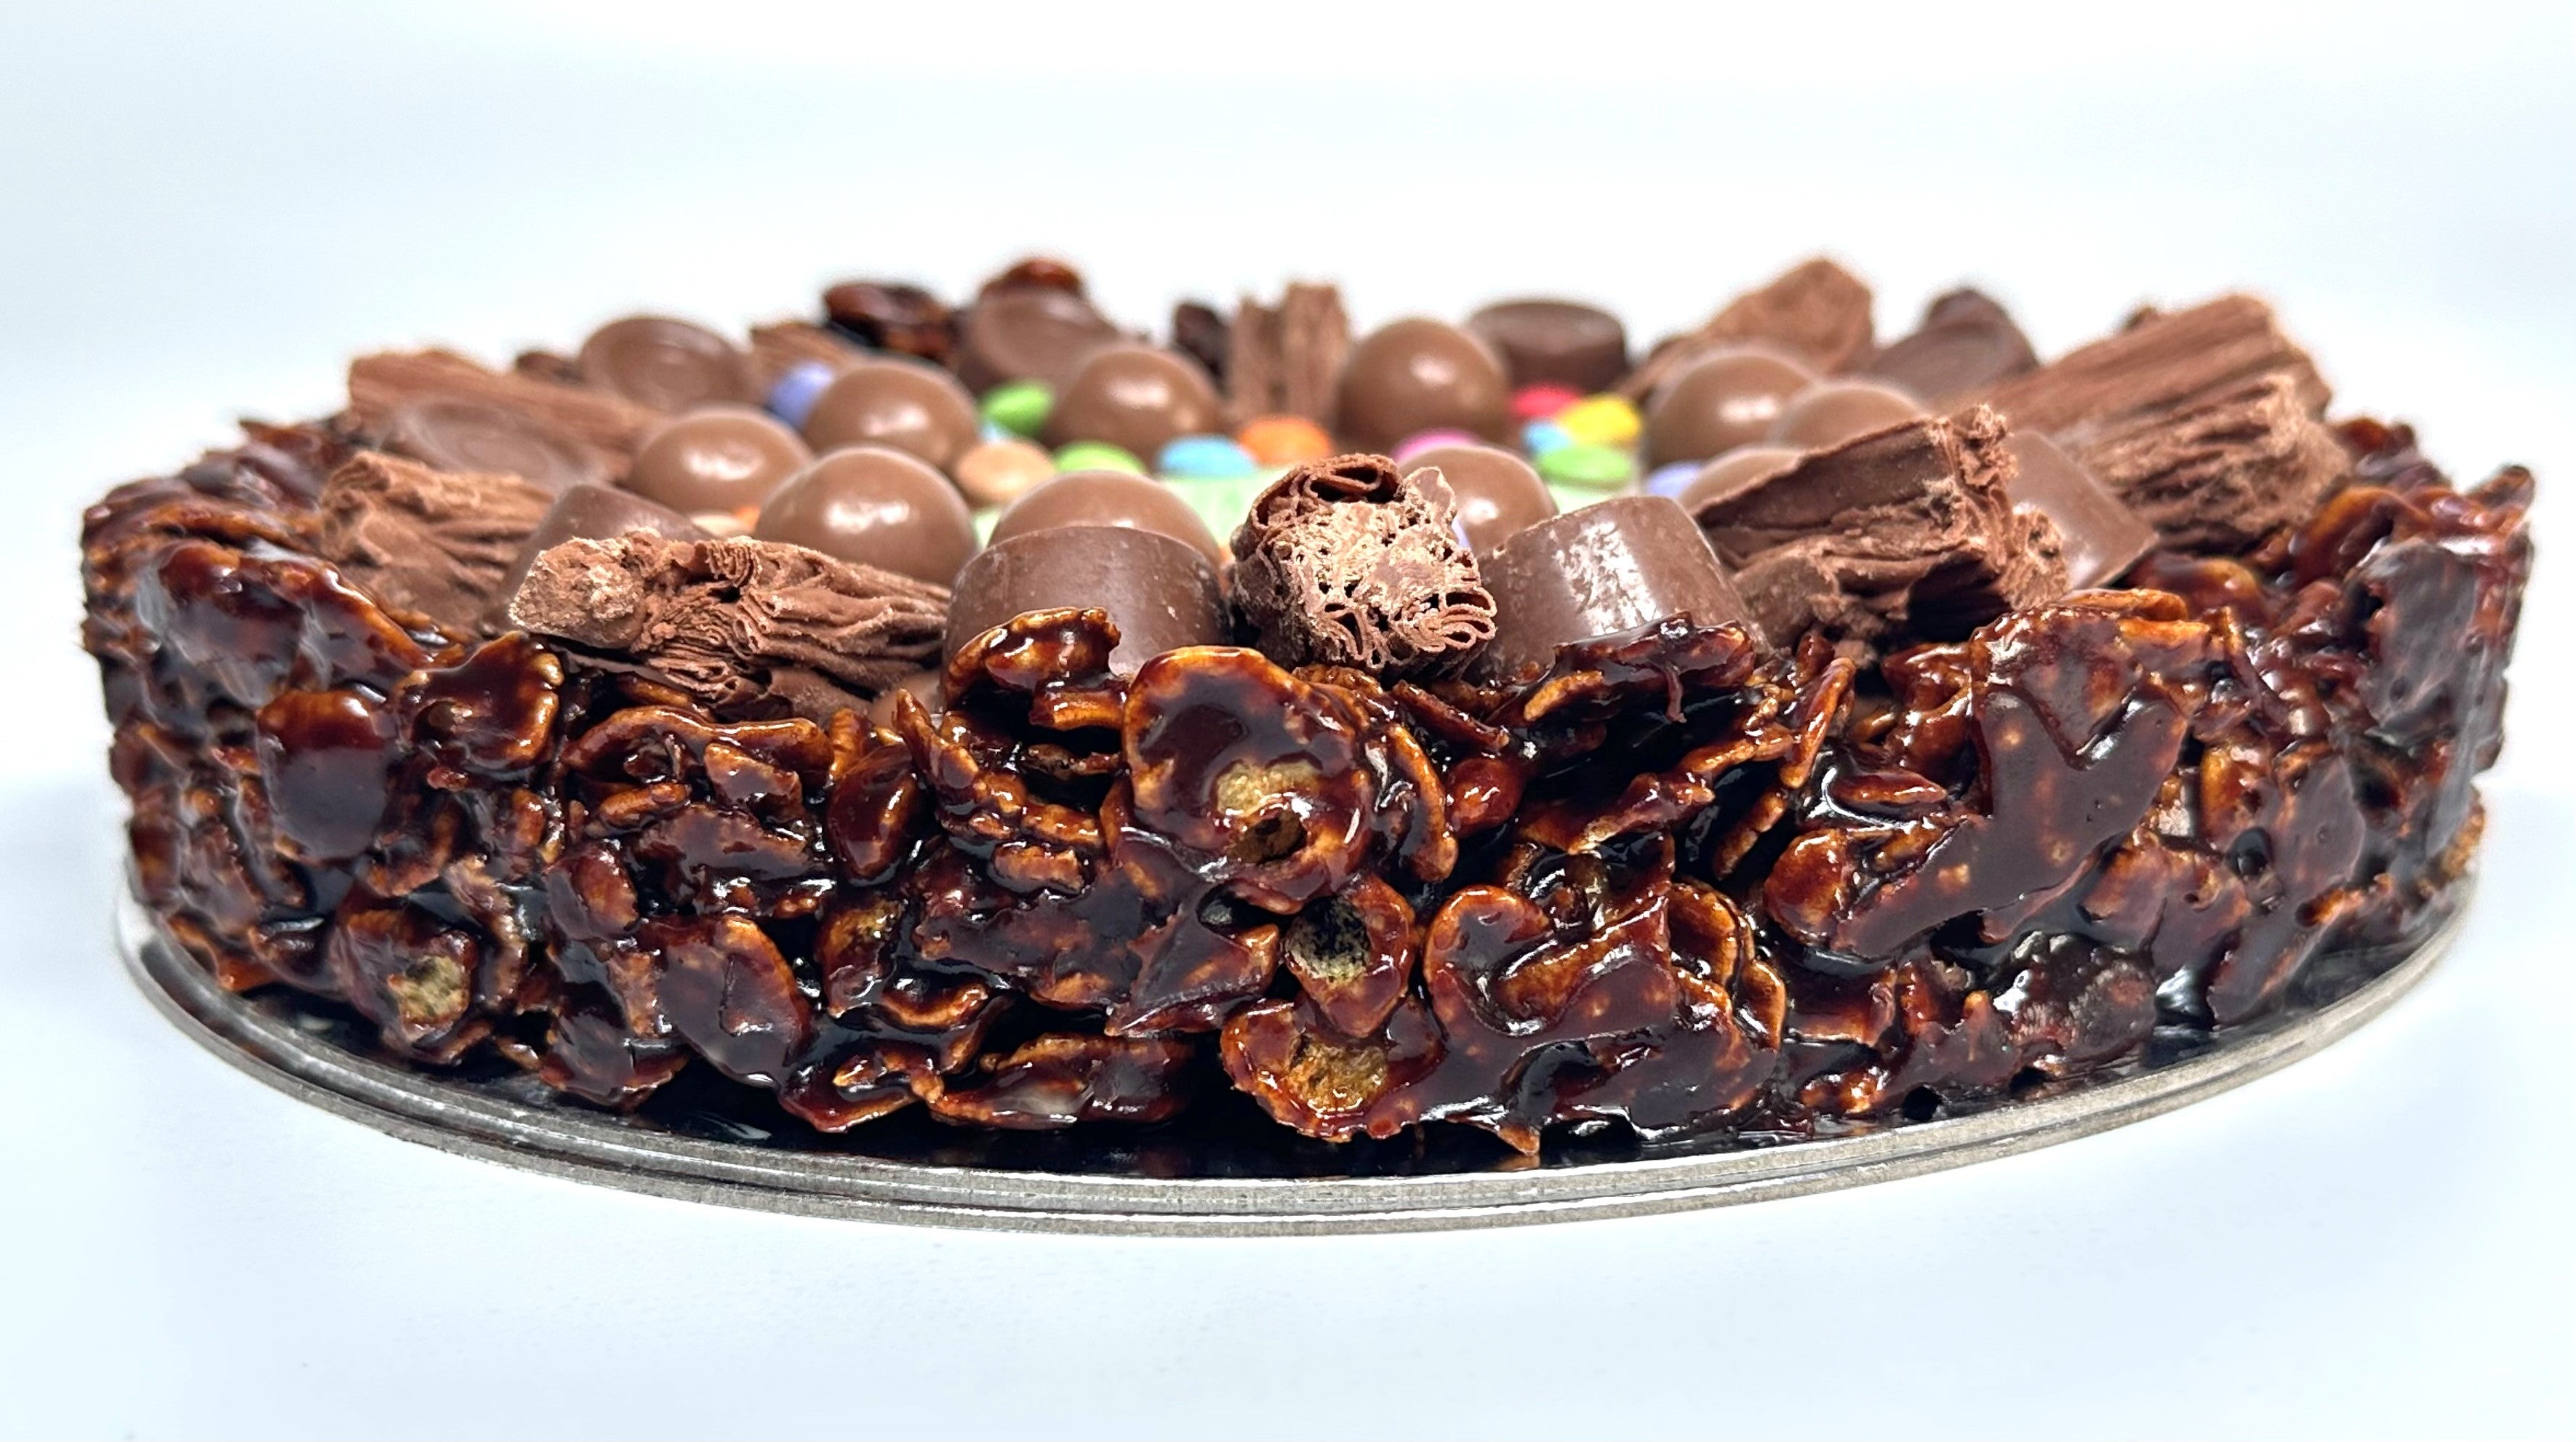 Chocolate lava cake recipe - BBC Food